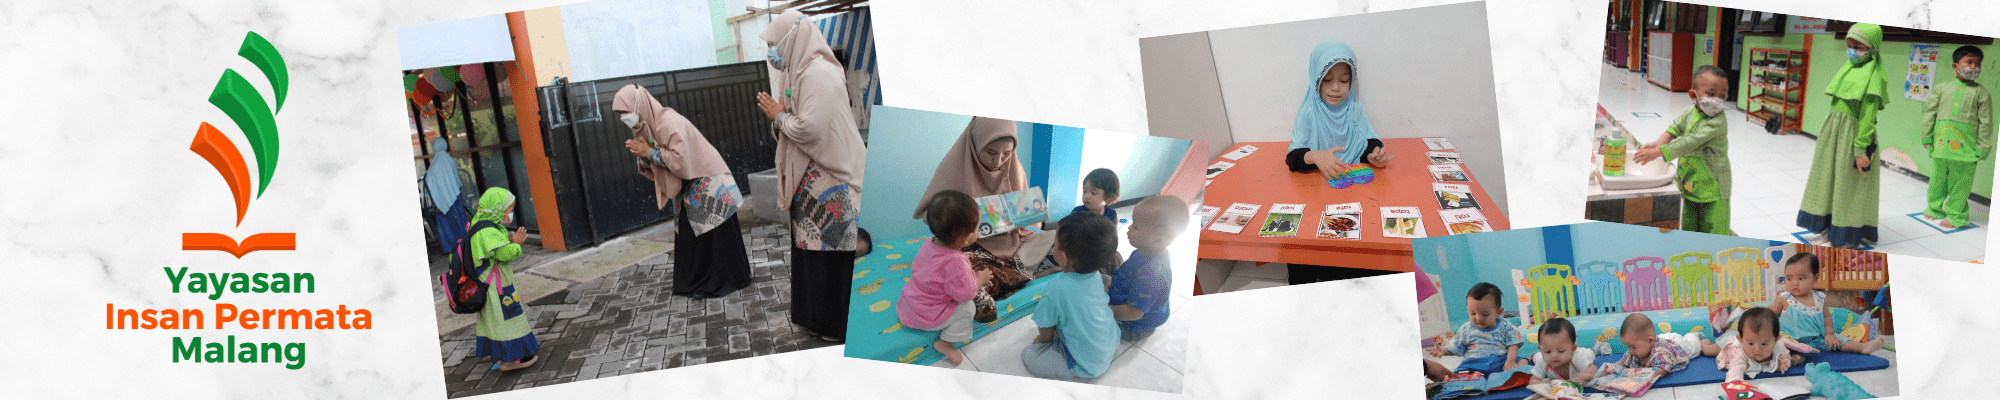 Website Resmi Yayasan | PAUDIT|SDIT|SMPIT|TALENTA|SAHABAT QURAN  Insan Permata Malang